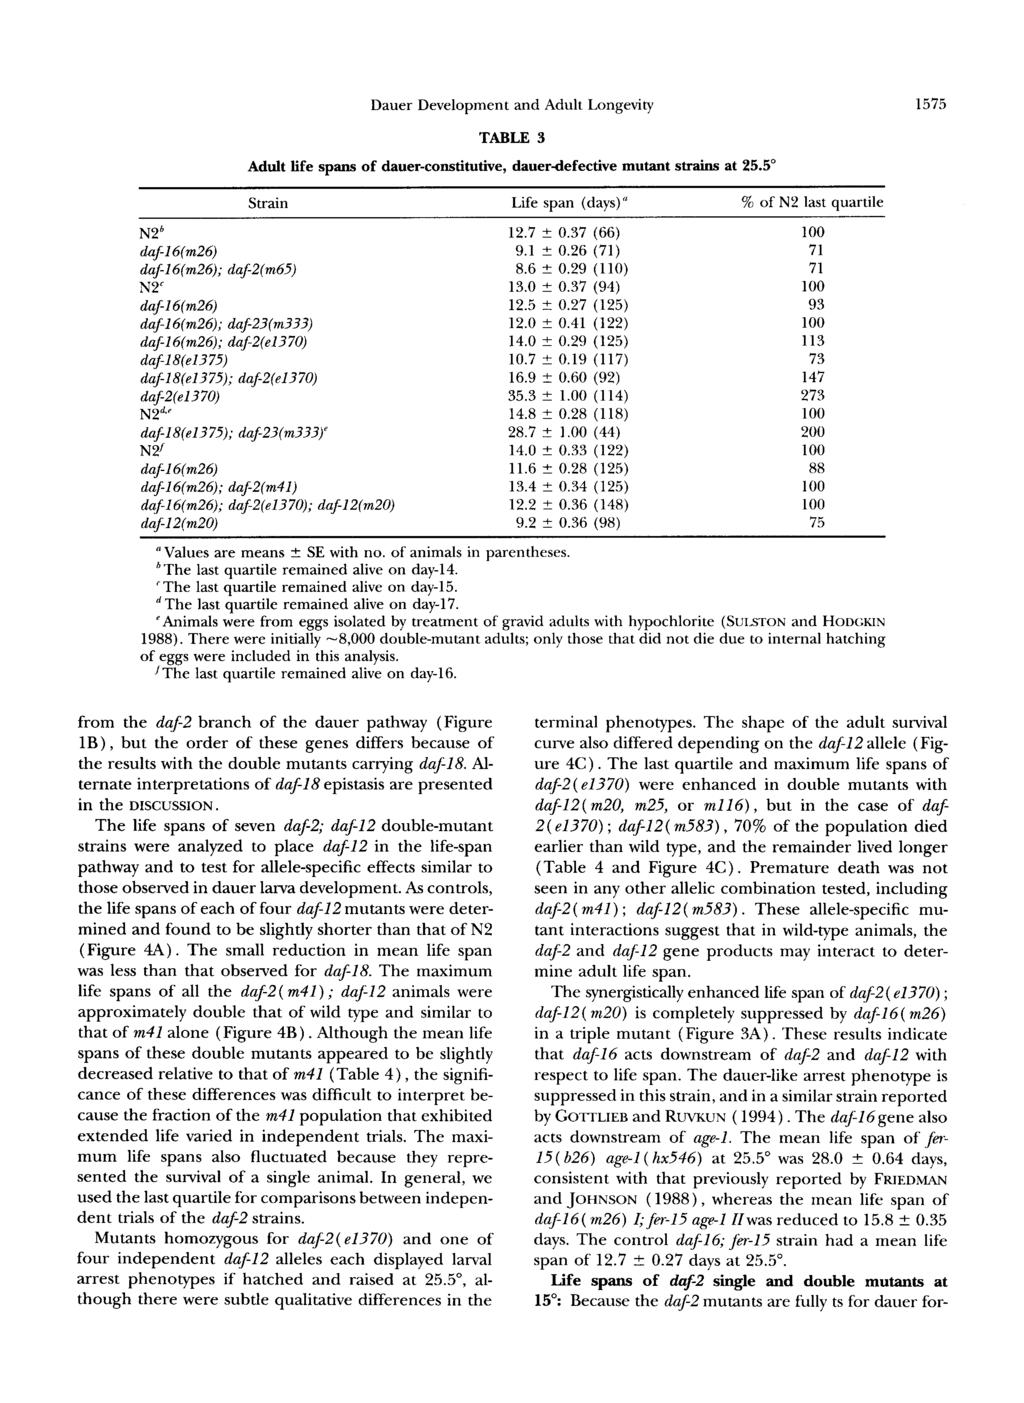 Dauer Development and Adult Longevity 1575 TABLE 3 Adult life spans of dauer-constitutive, dauerdefective mutant strains at 25.5" Strain Life span (days)' N2 % of N2 12.7 f 0.37 (66) 100 dafl6(m26) 9.